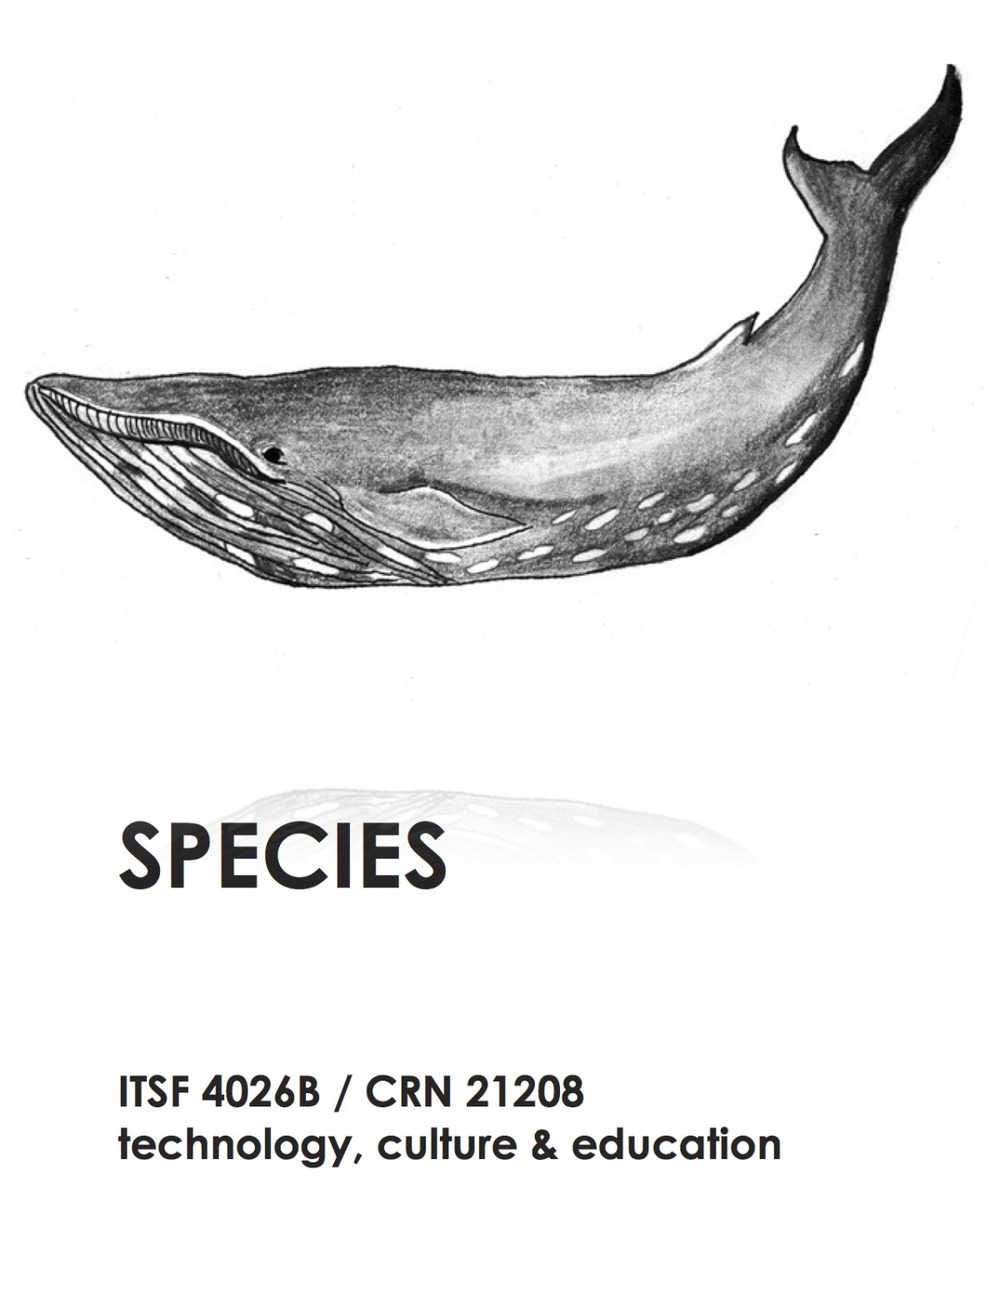 itsf 4026b flyers - species.jpg